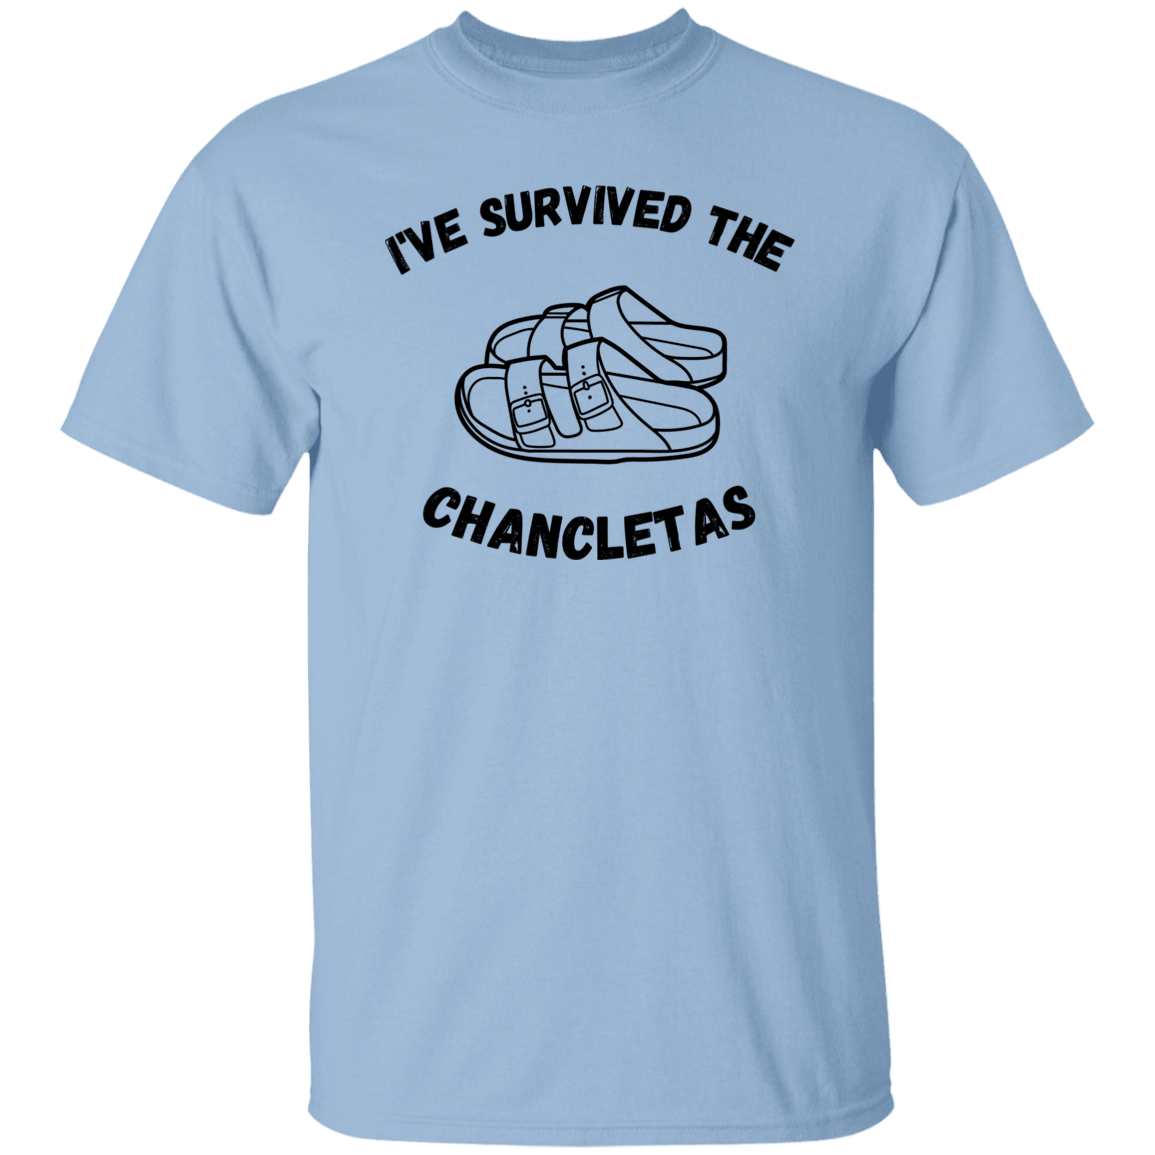 I survived the Chanceletas T-Shirt